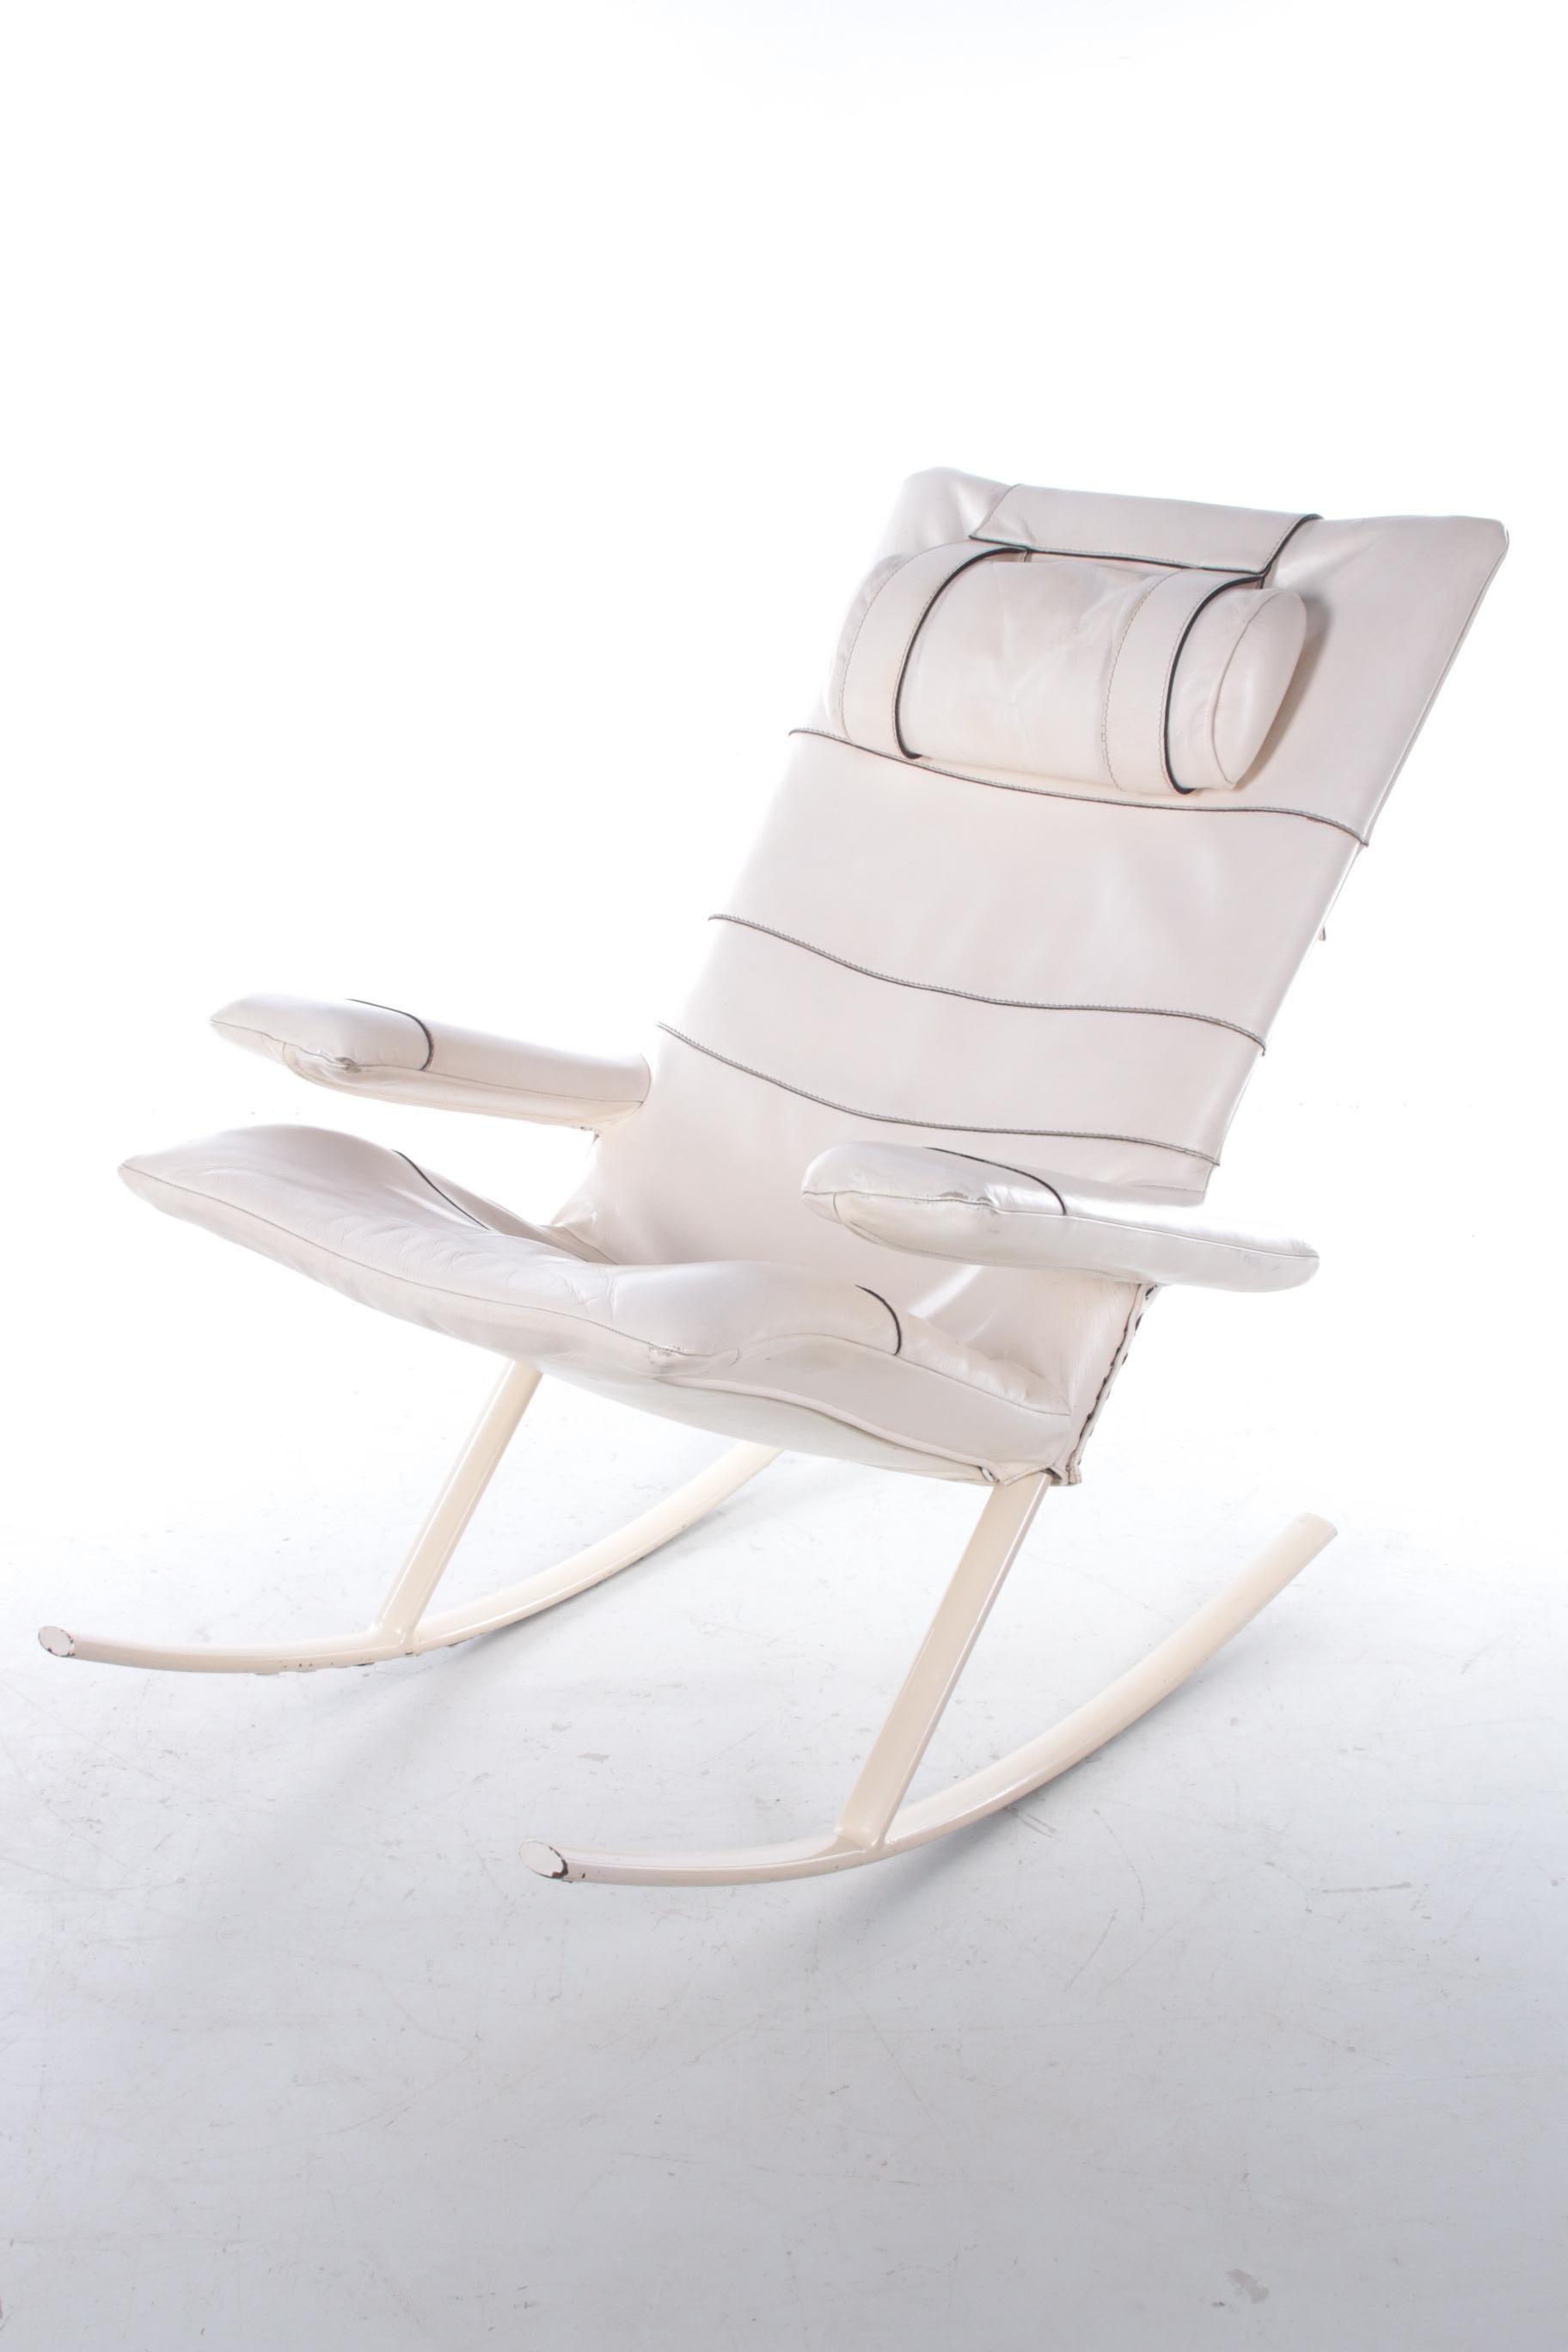 Mid-Century Modern White Leather Rocking Chair Design by Jori, Belgium 1960s